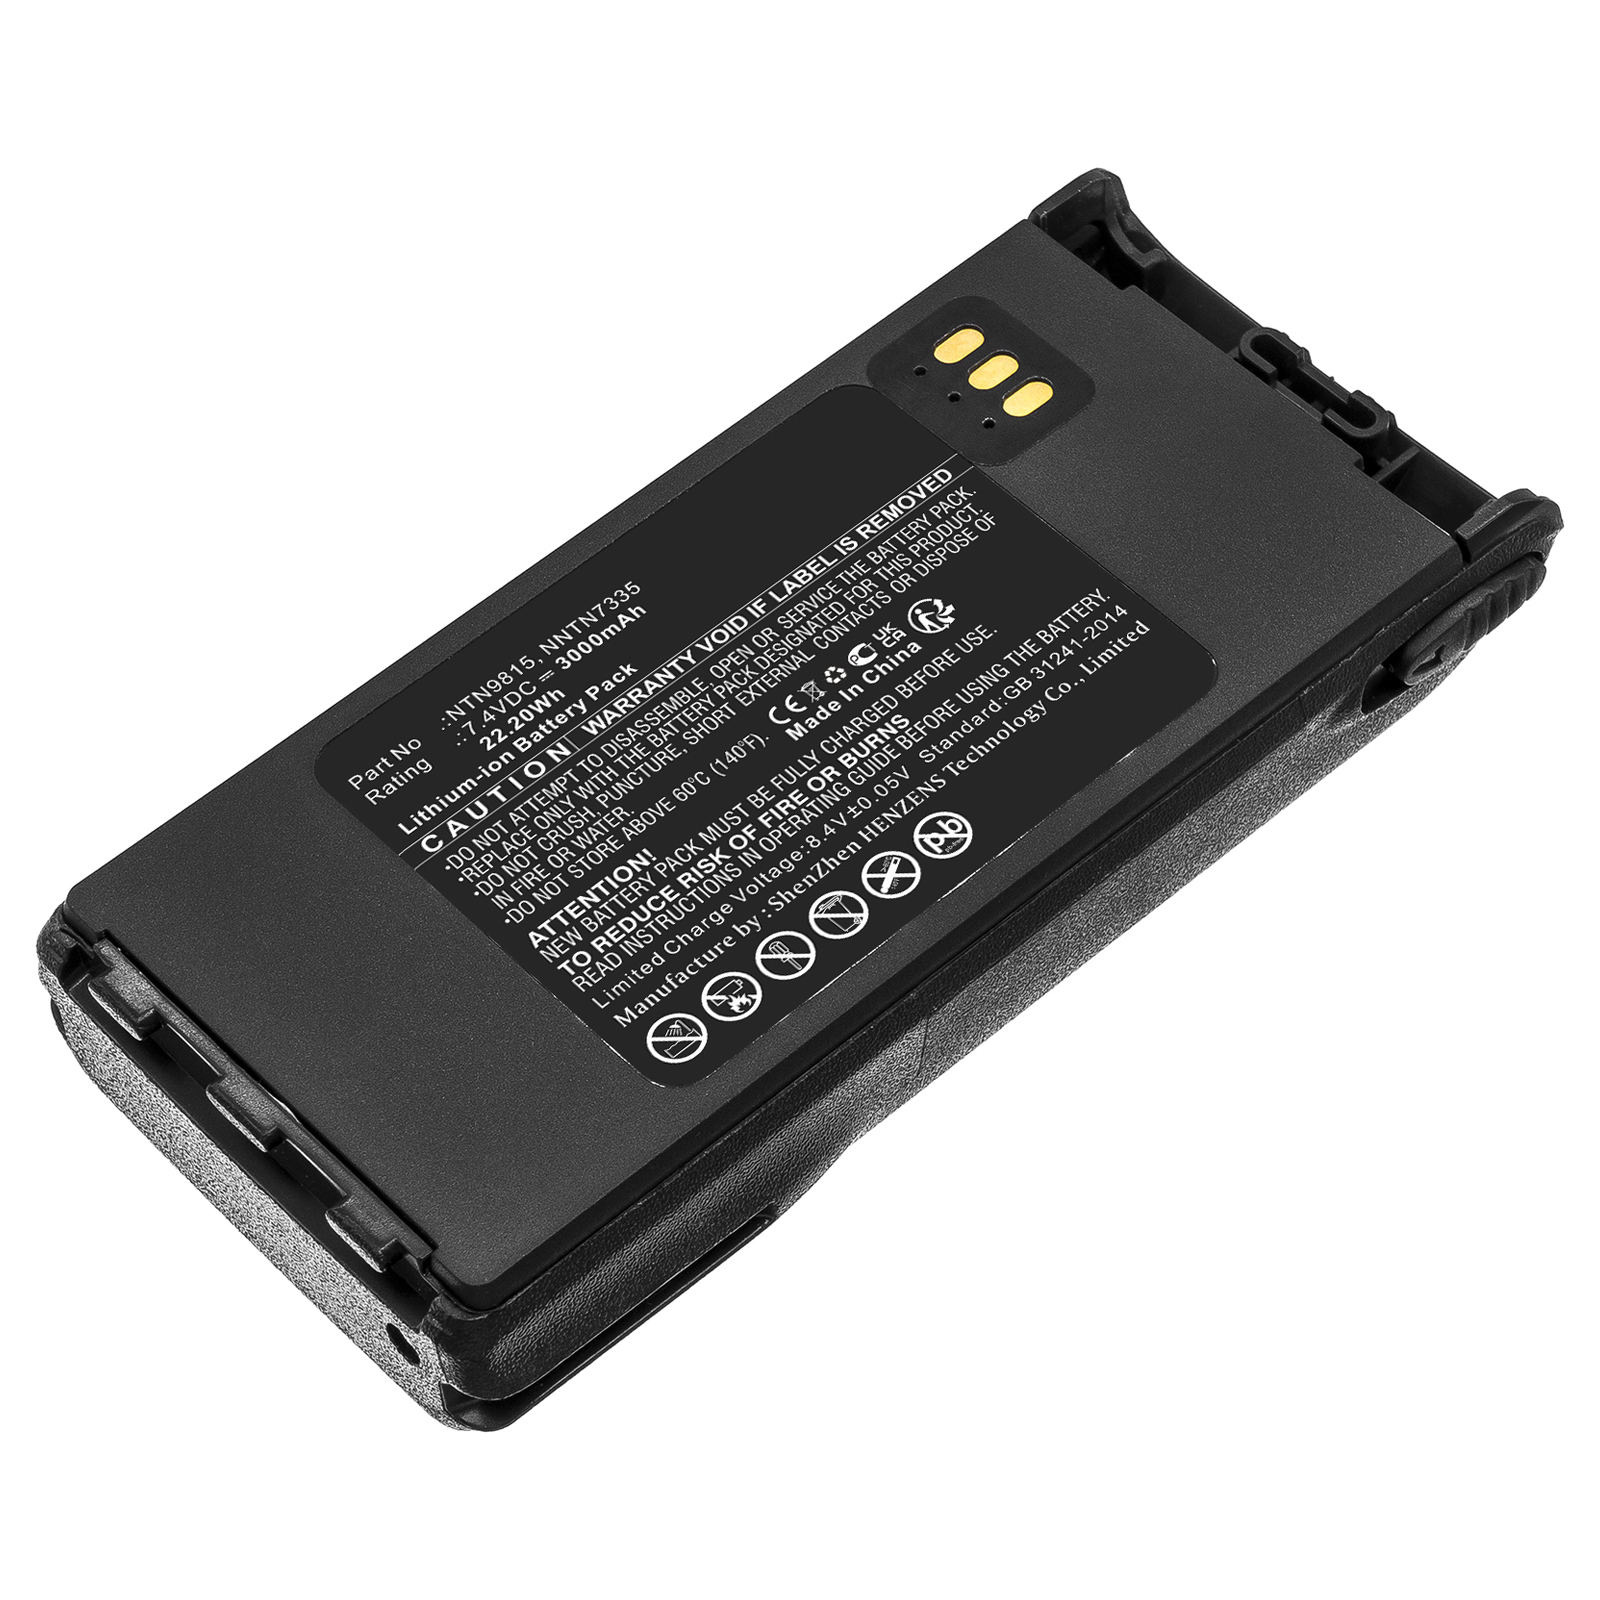 Synergy Digital 2-Way Radio Battery, Compatible with Motorola HNN9815 2-Way Radio Battery (Li-ion, 7.4V, 3000mAh)